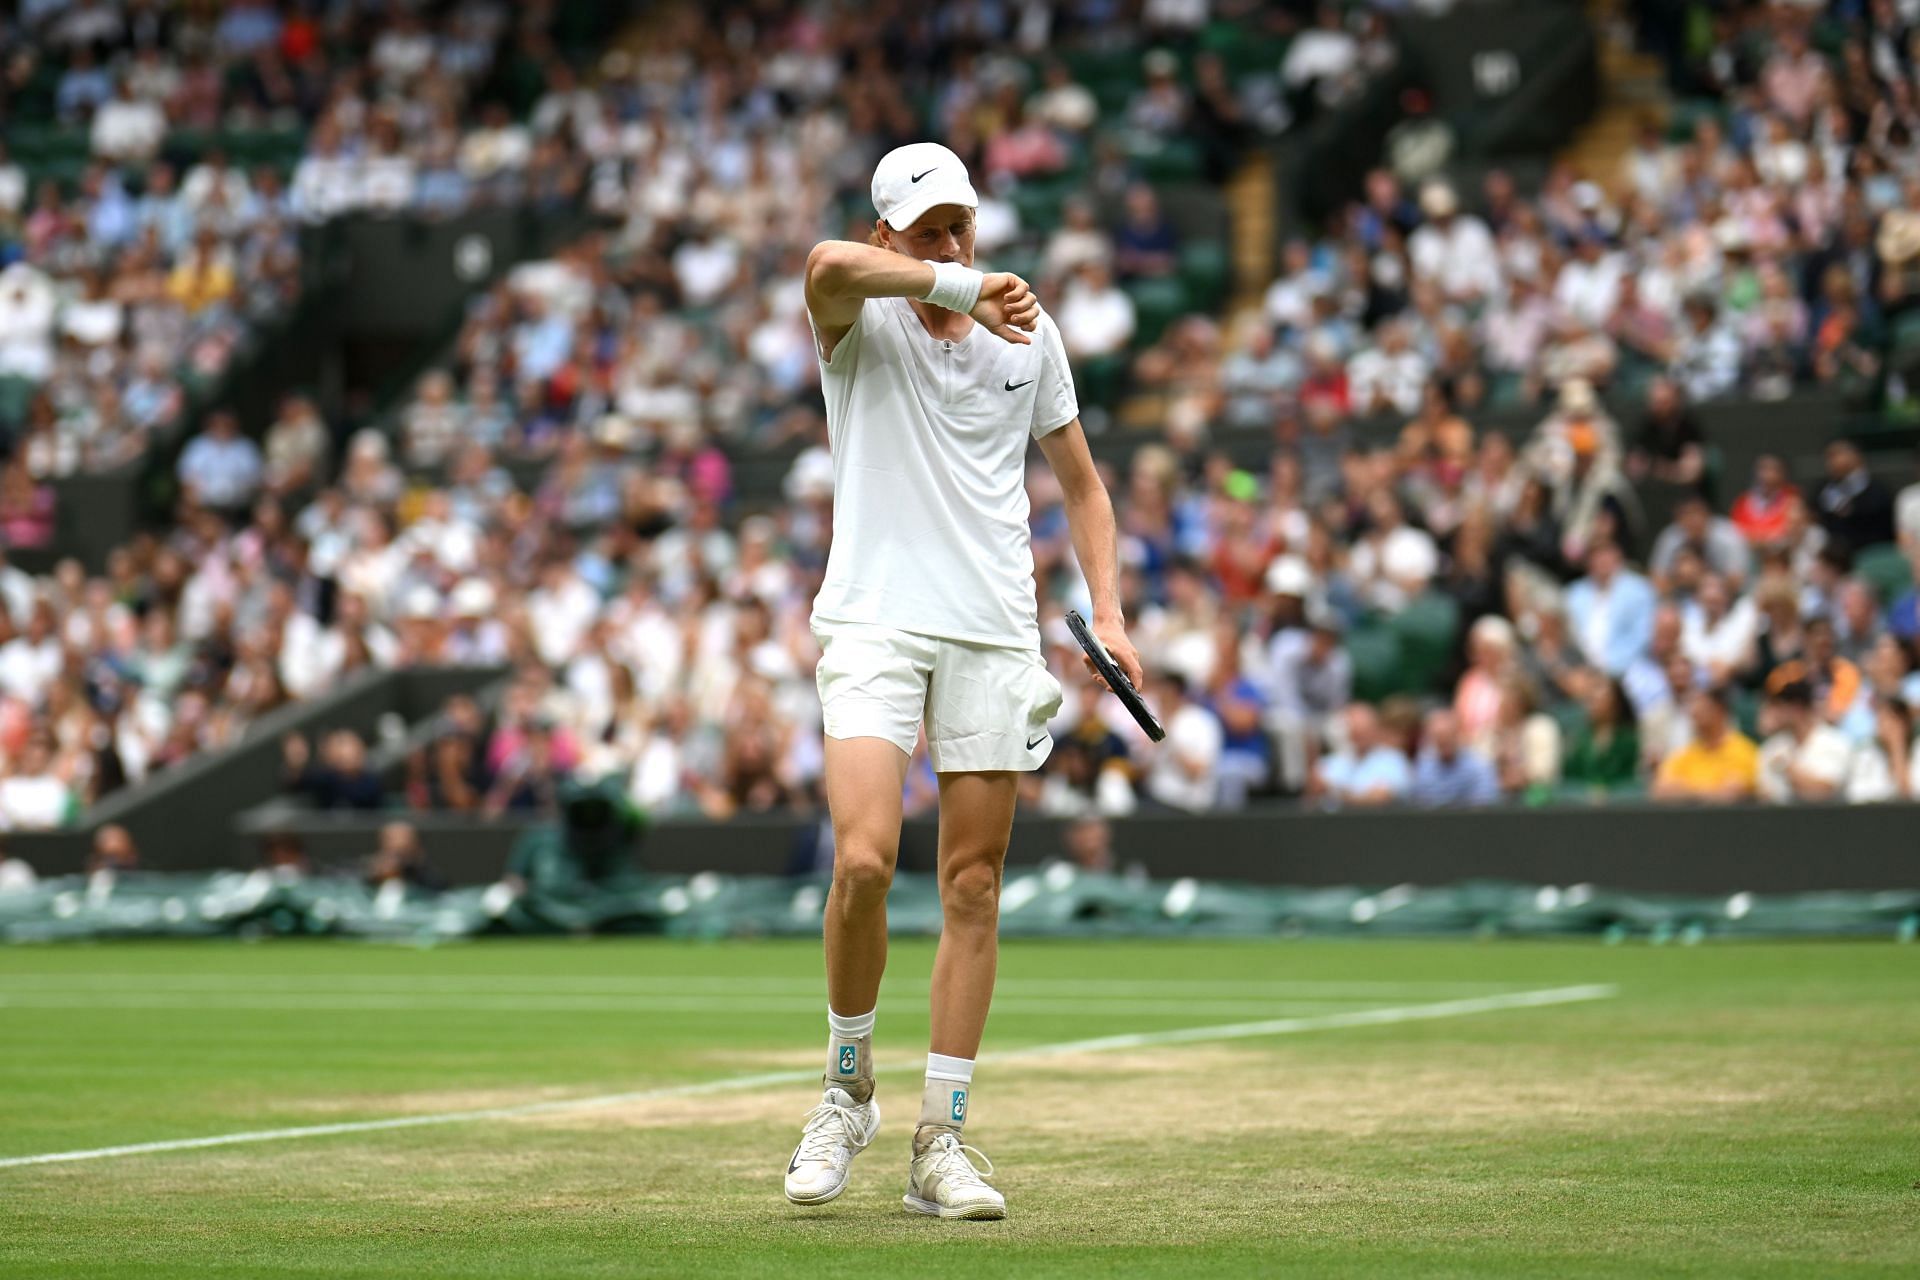 Jannik Sinner in action during the Wimbledon quarterfinals on Tuesday